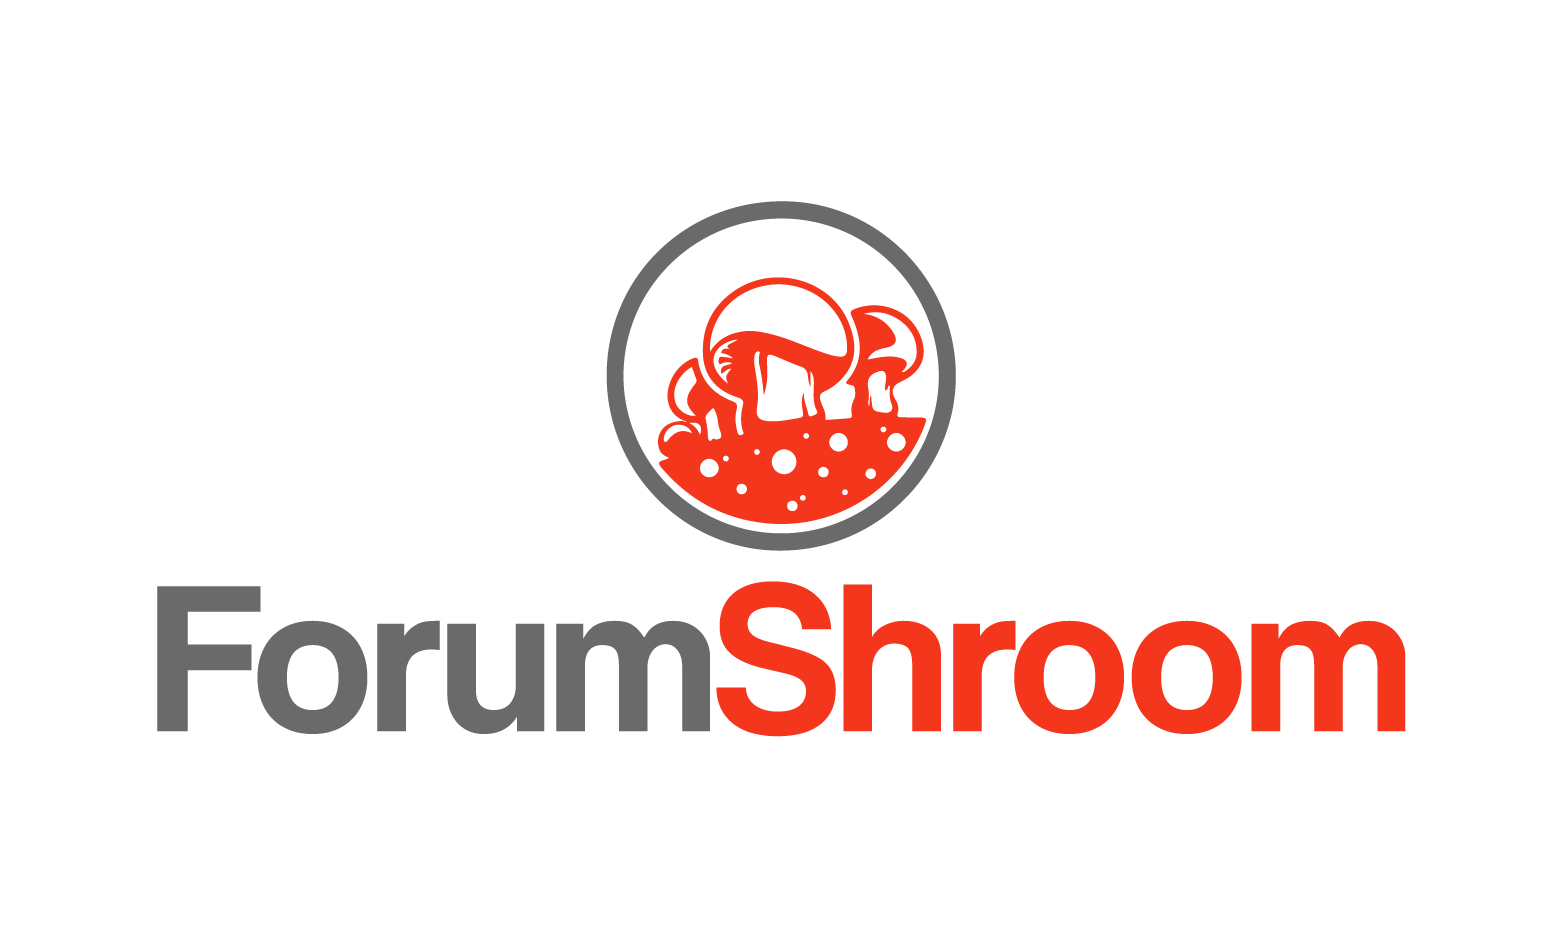 ForumShroom.com - Creative brandable domain for sale